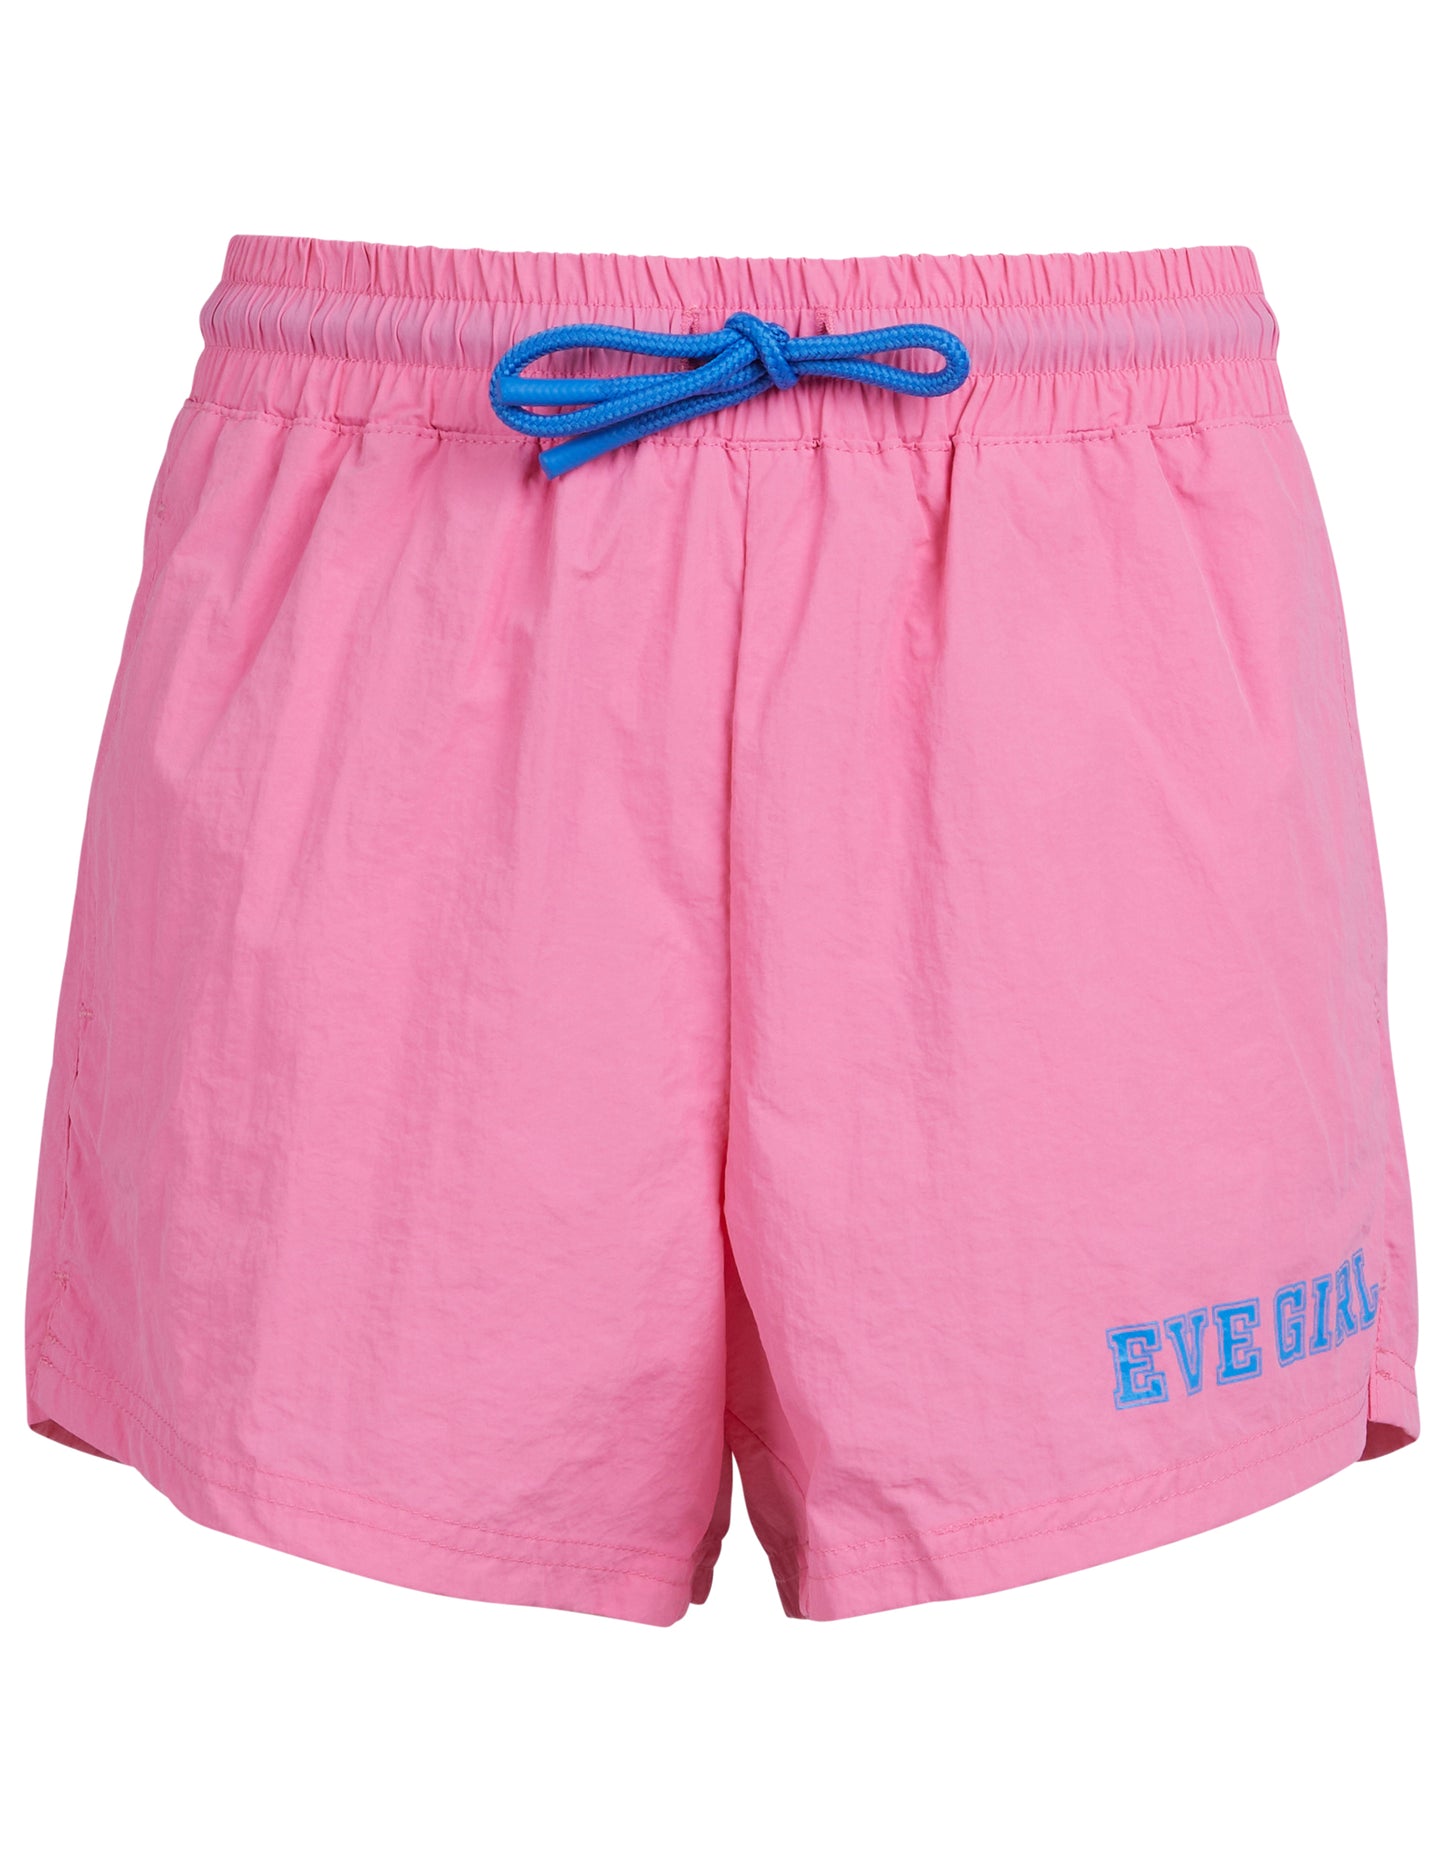 Eve Girl Academy Short Pink